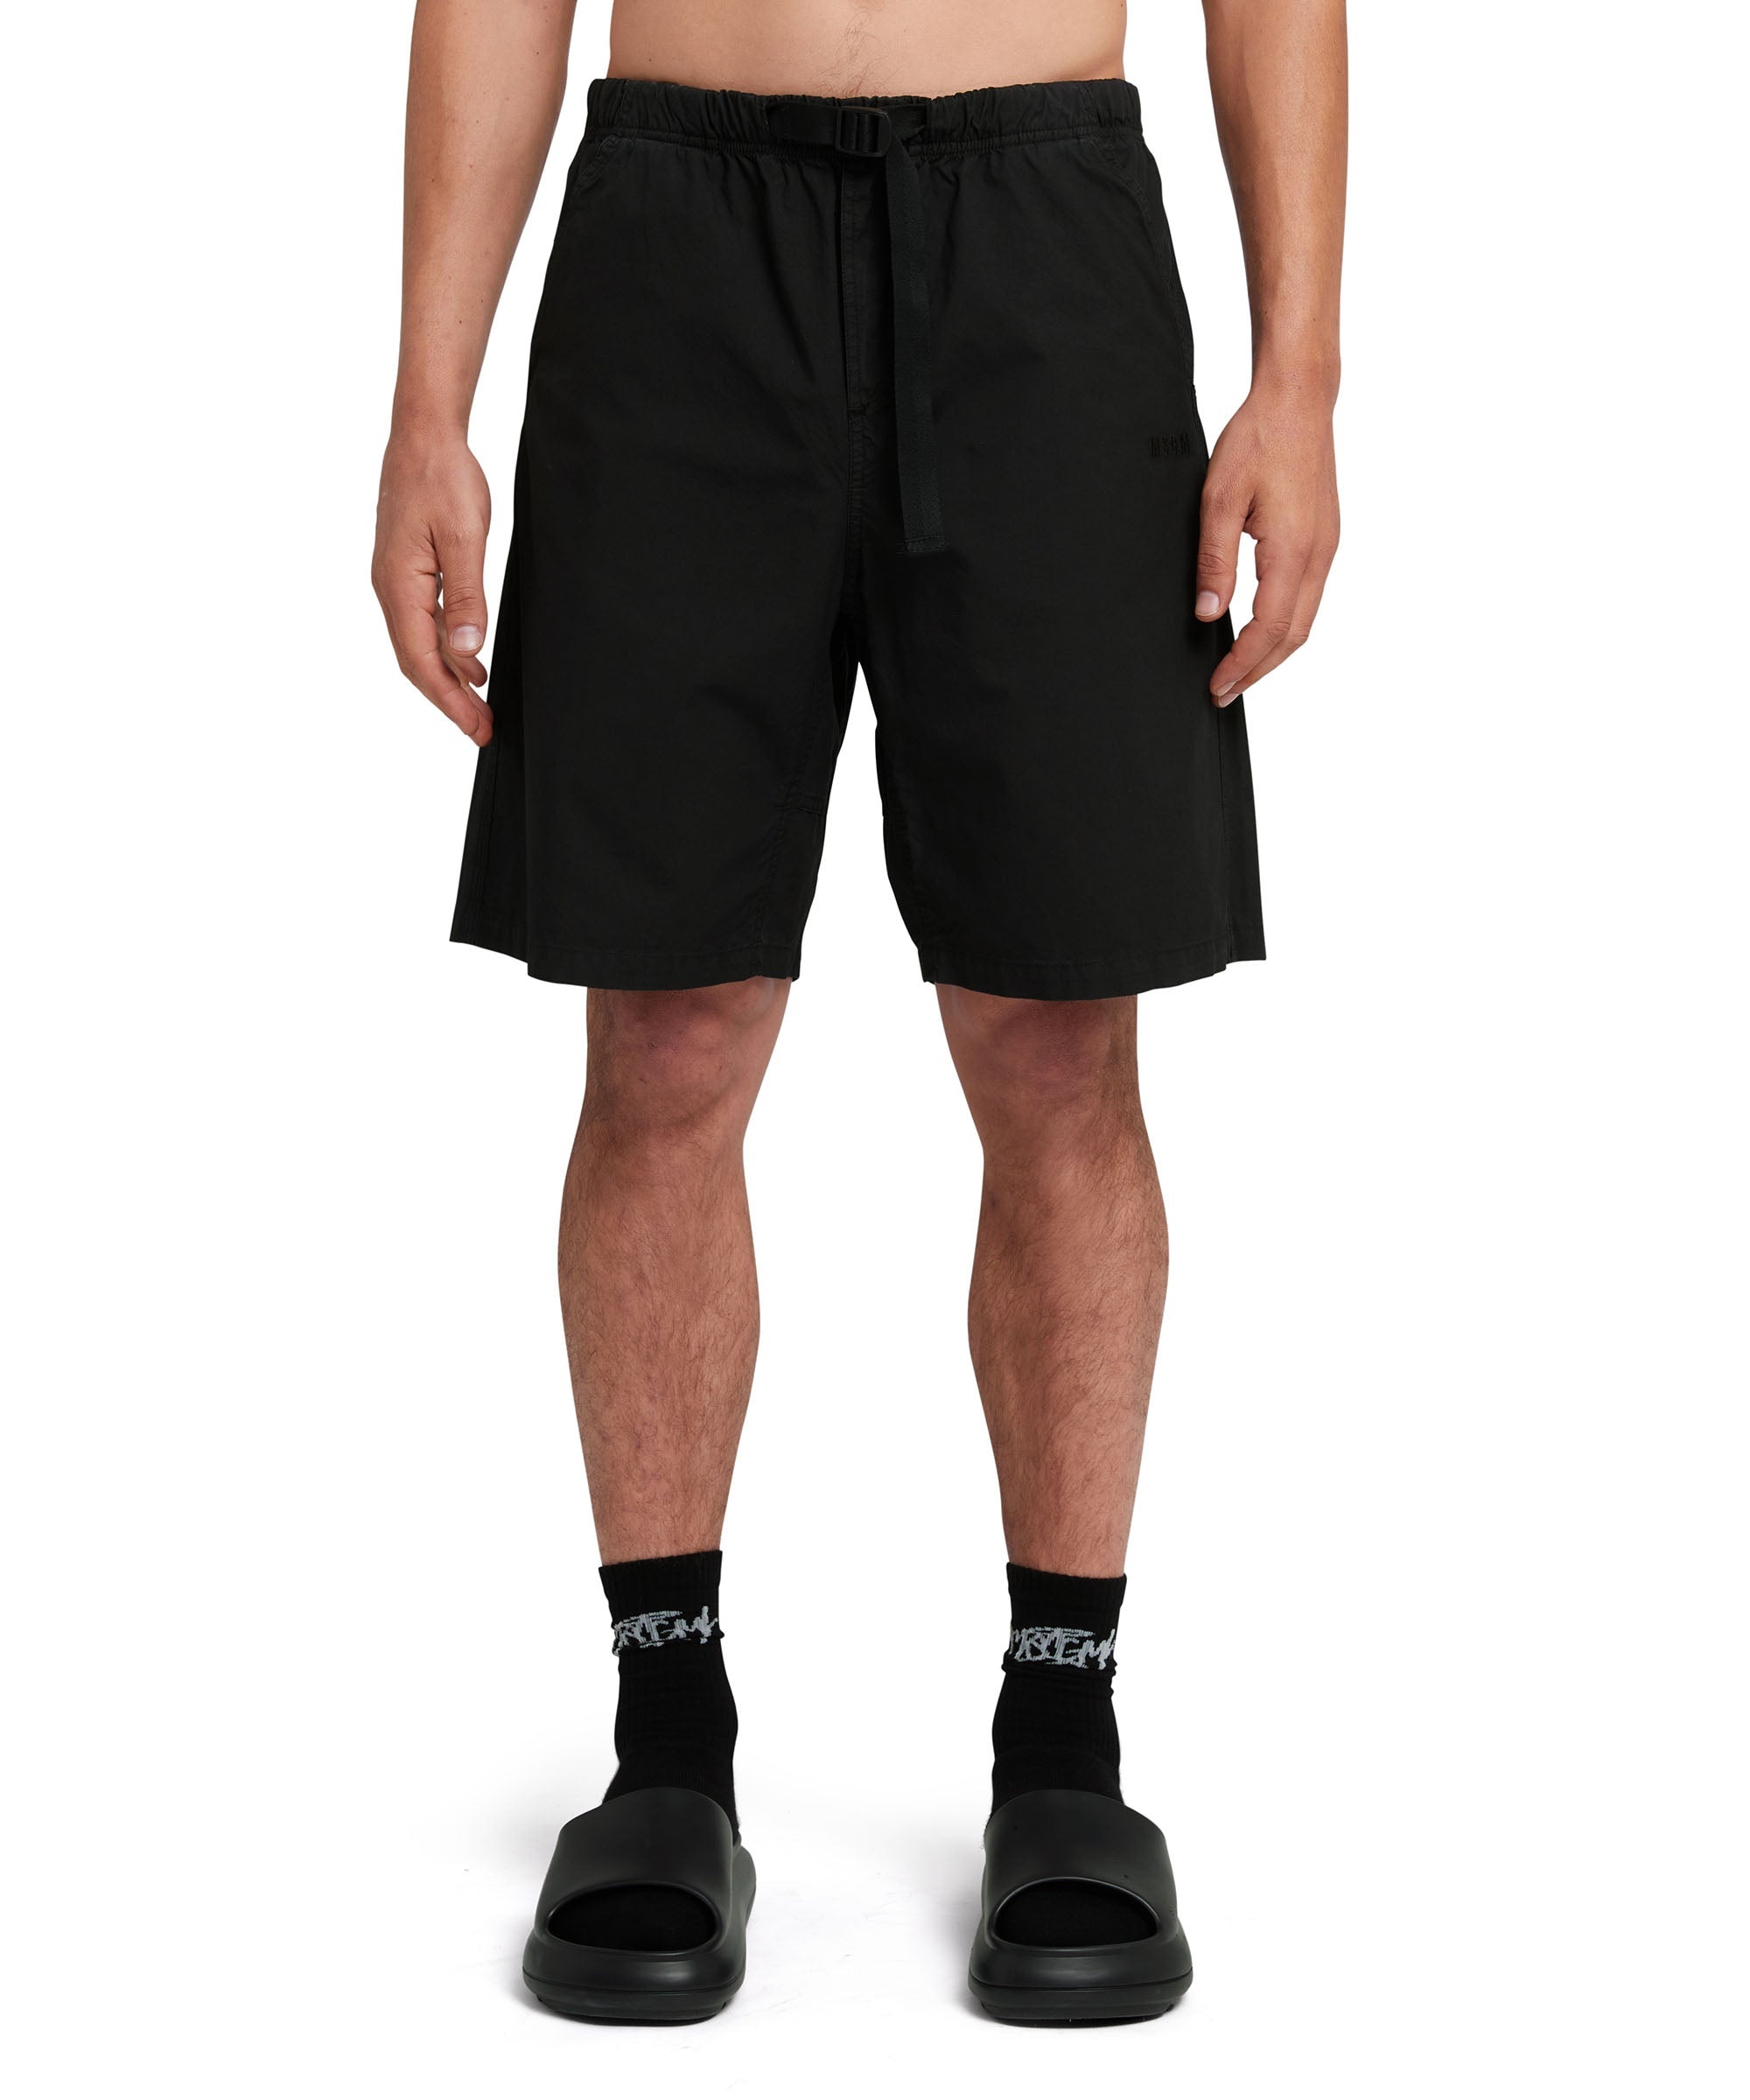 Poplin shorts - 2